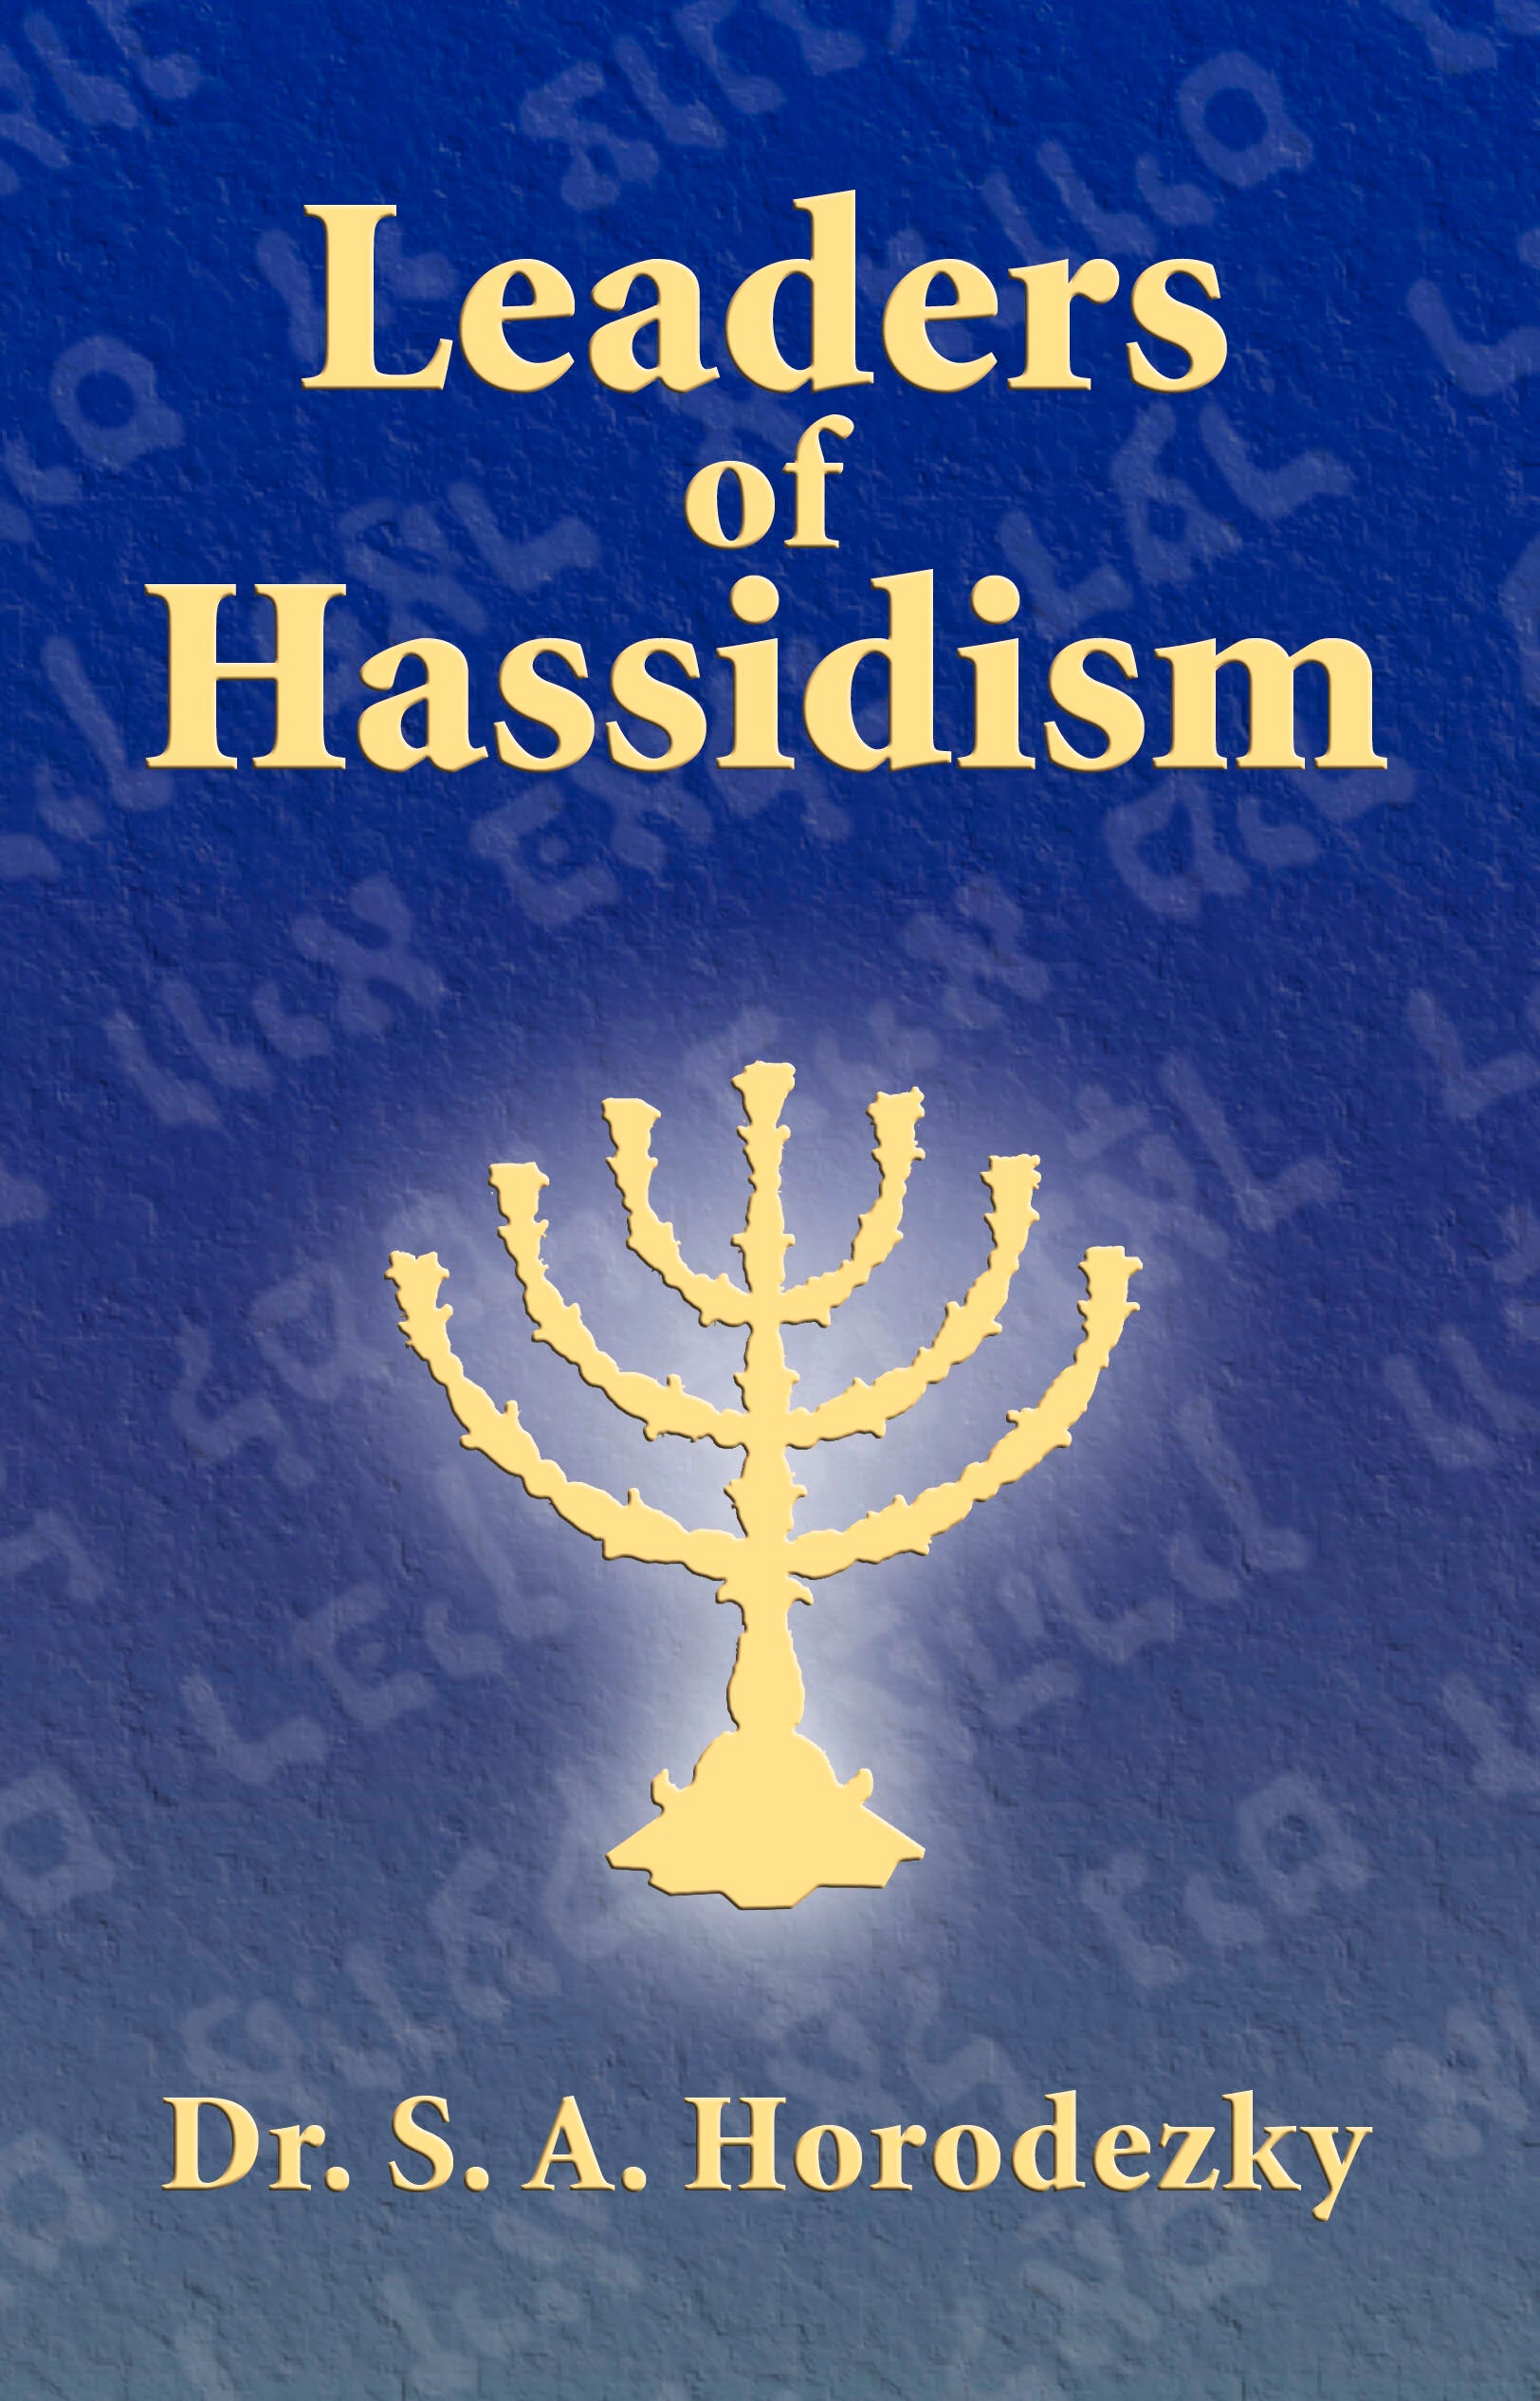 Leaders of Hassidism